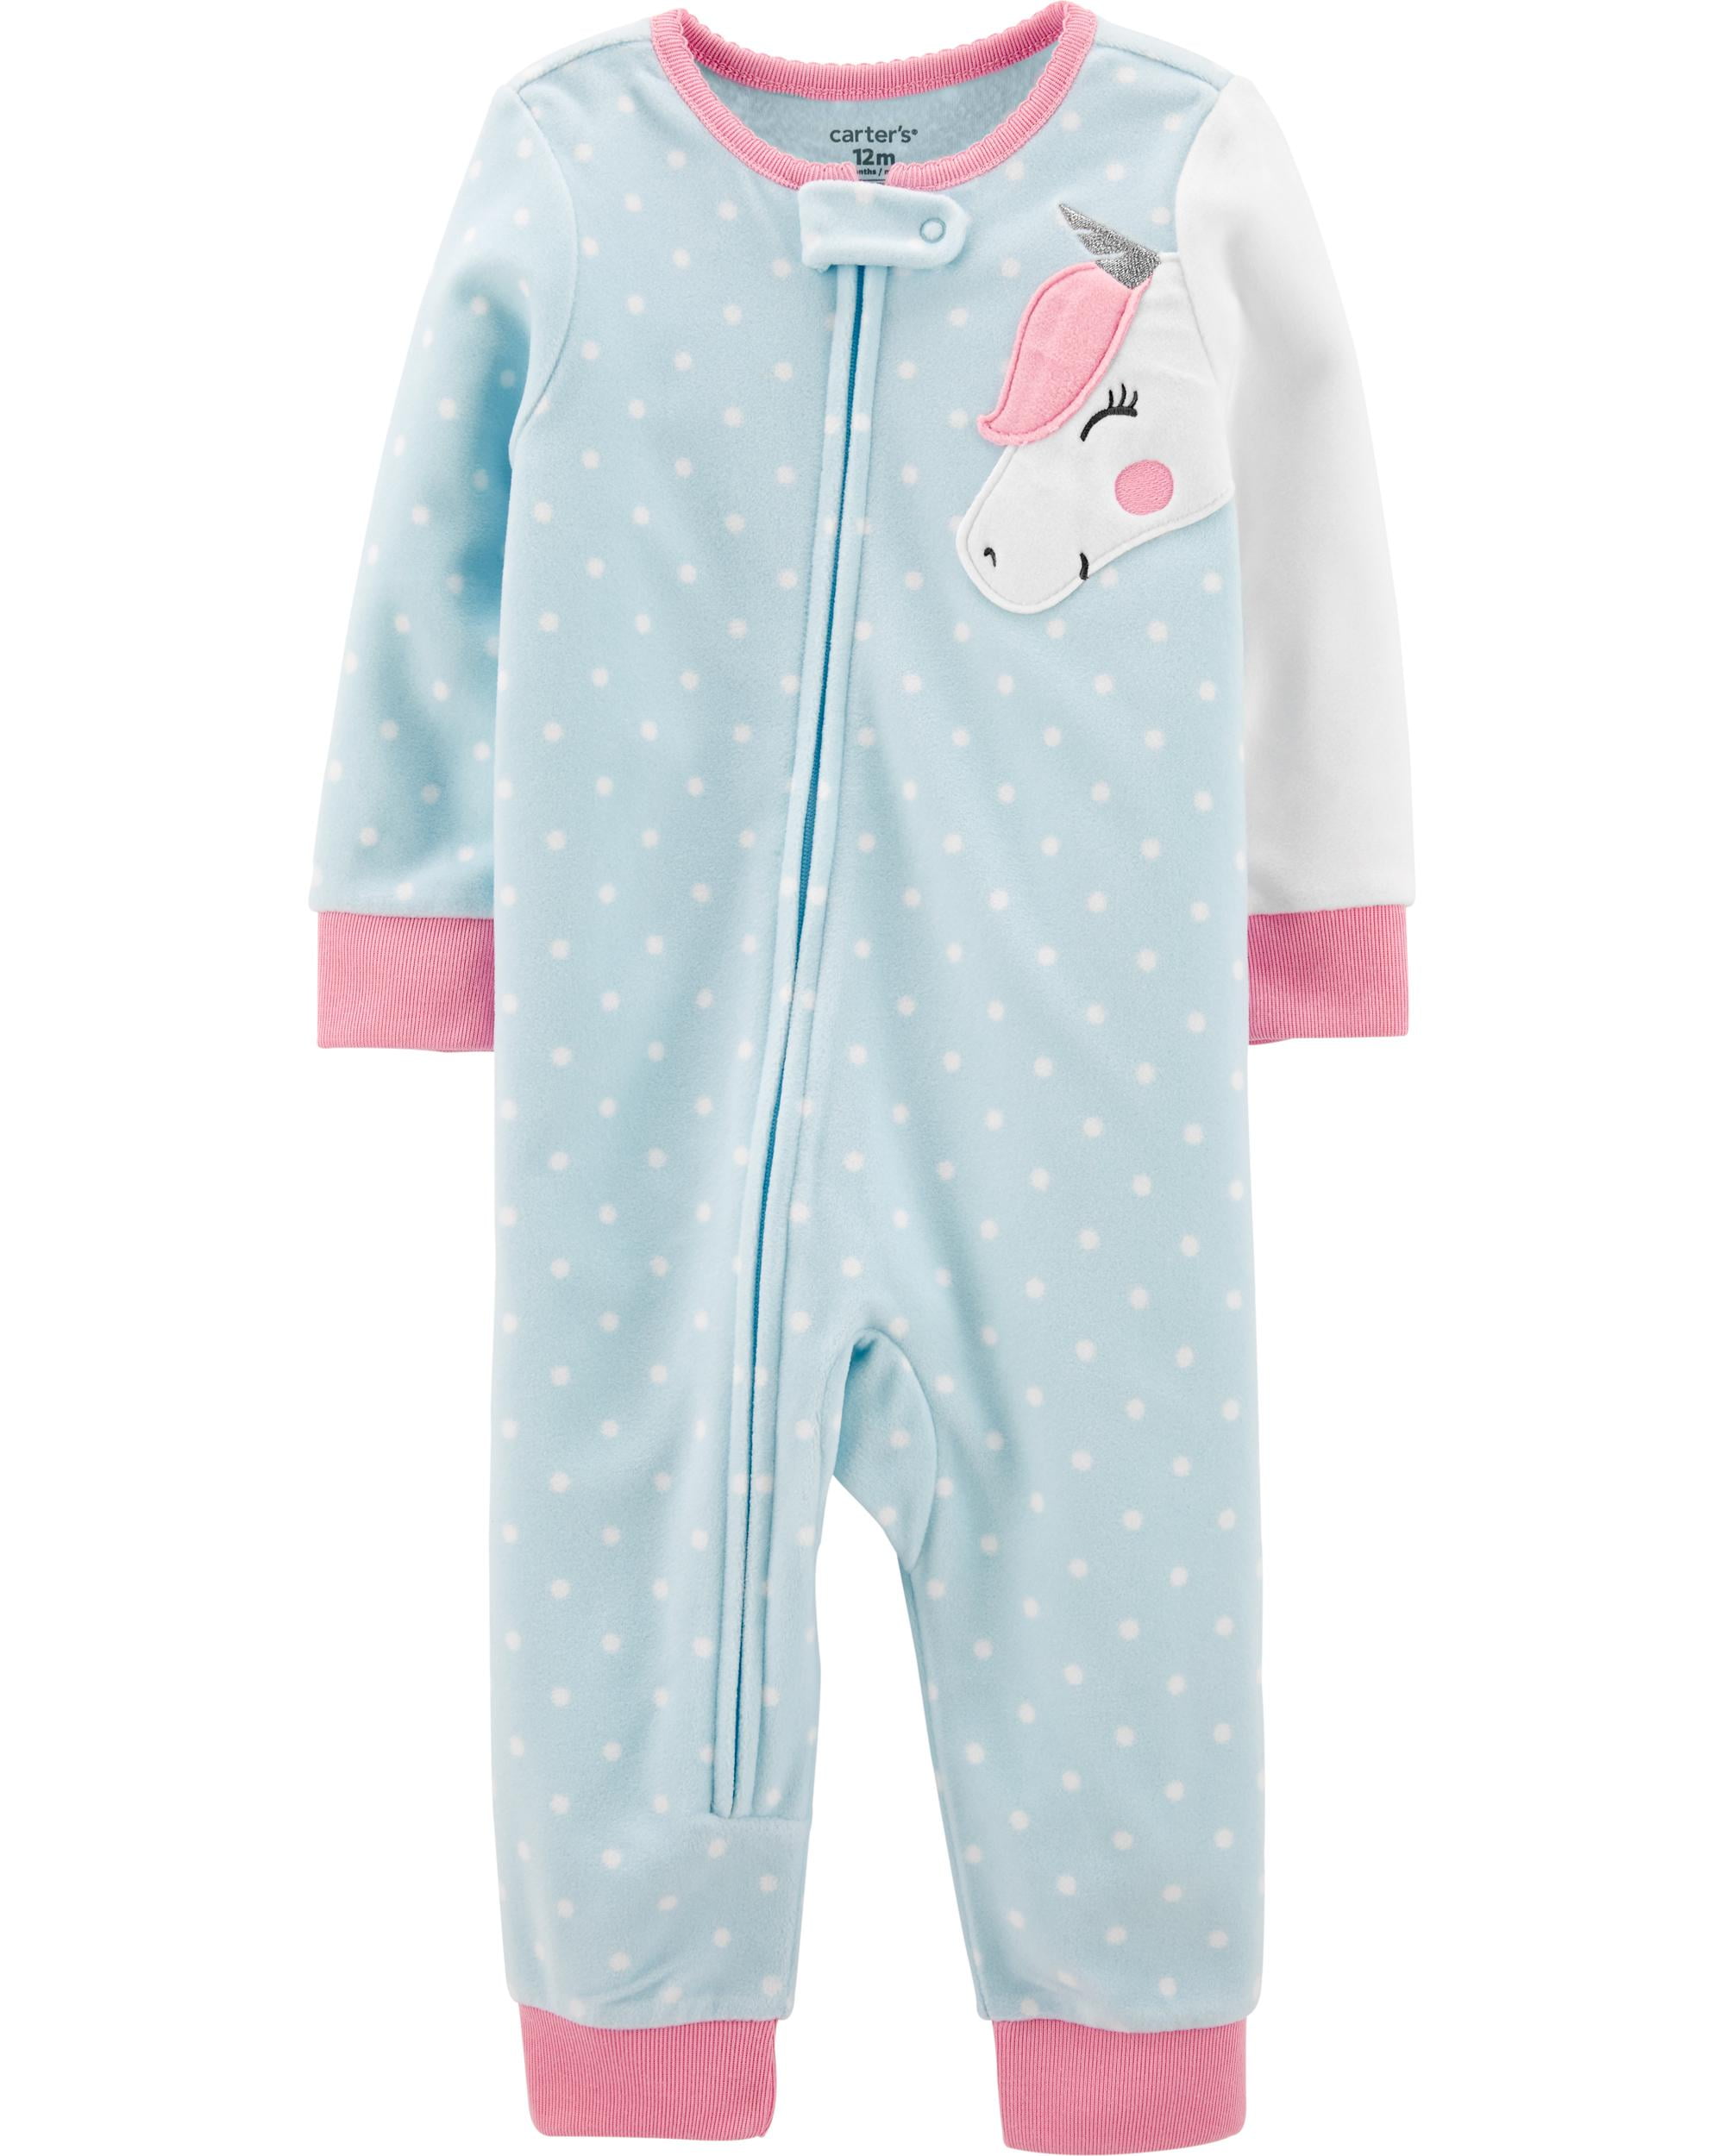 Carter's - Unicorn Fleece Footless Pajamas One peice PJs Size 12 months ...